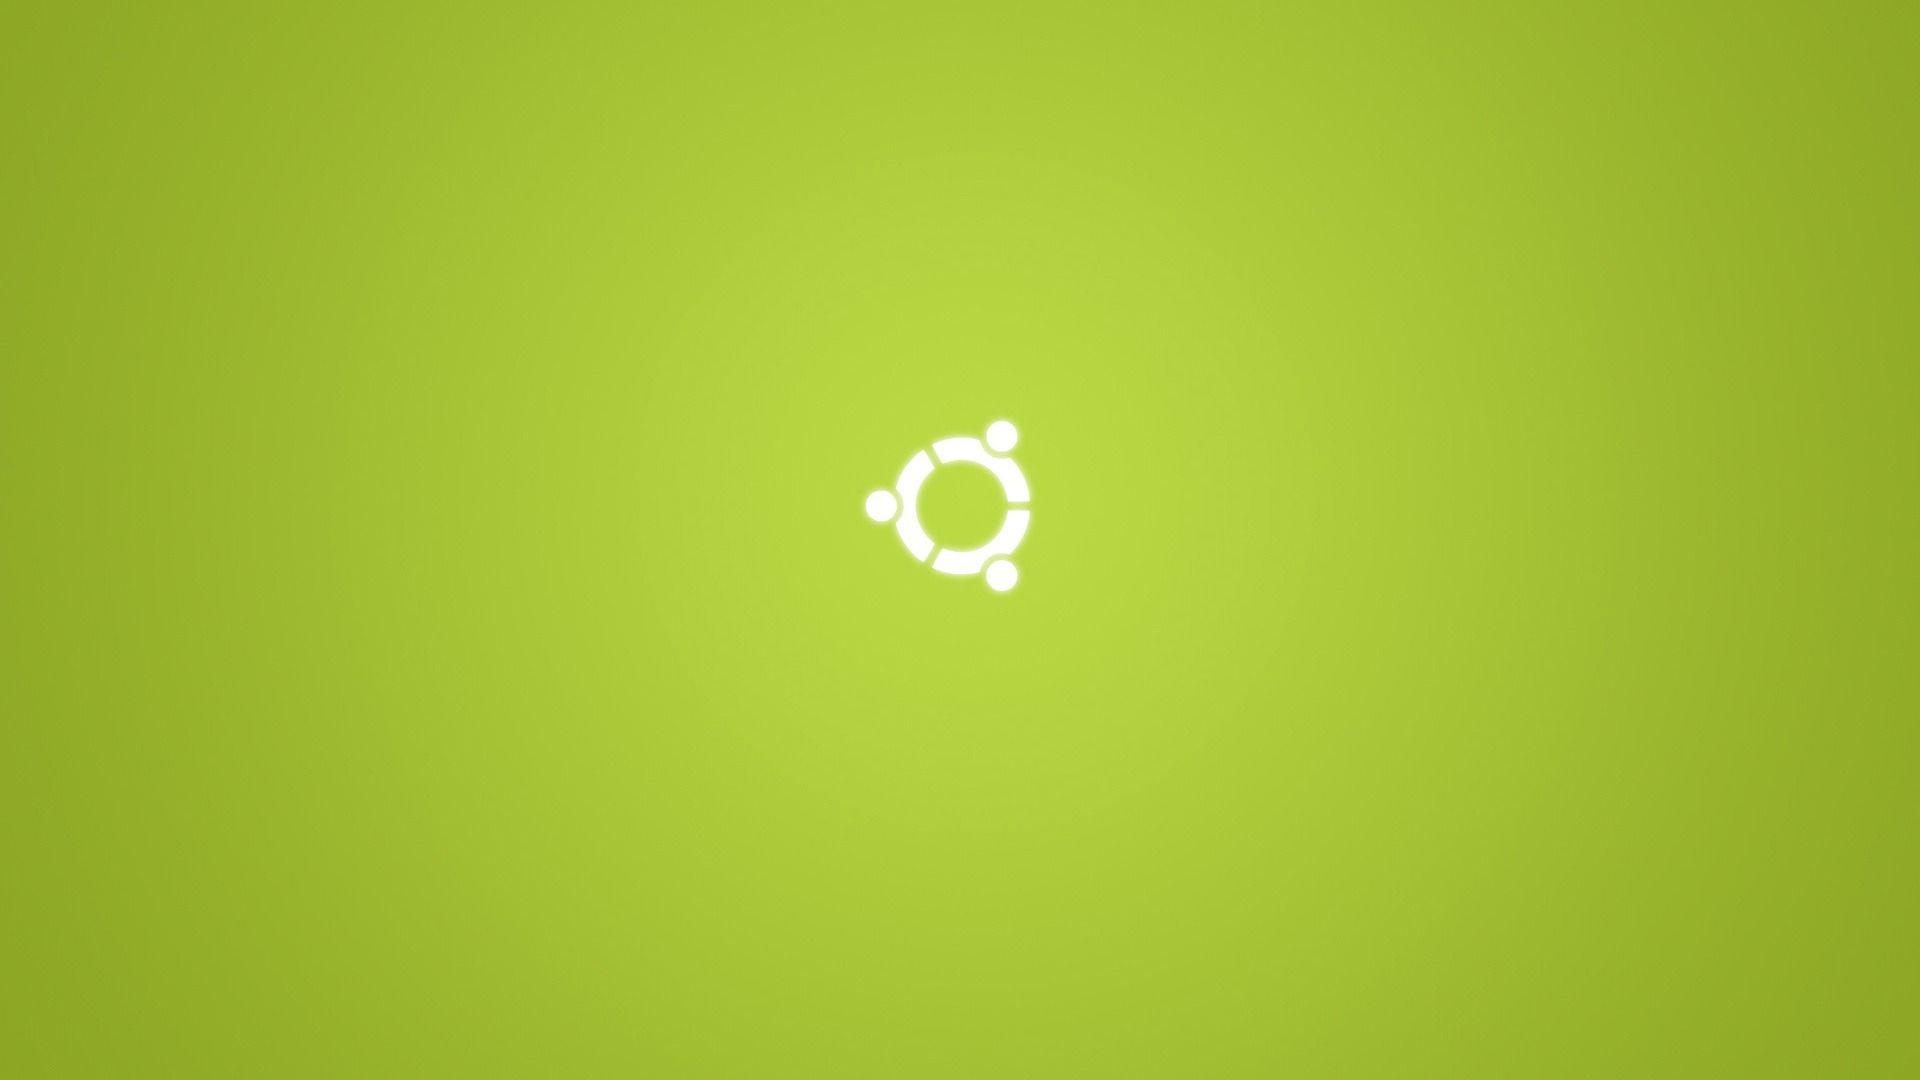 Ubuntu Green Linux System Desktop Background Wallpaper